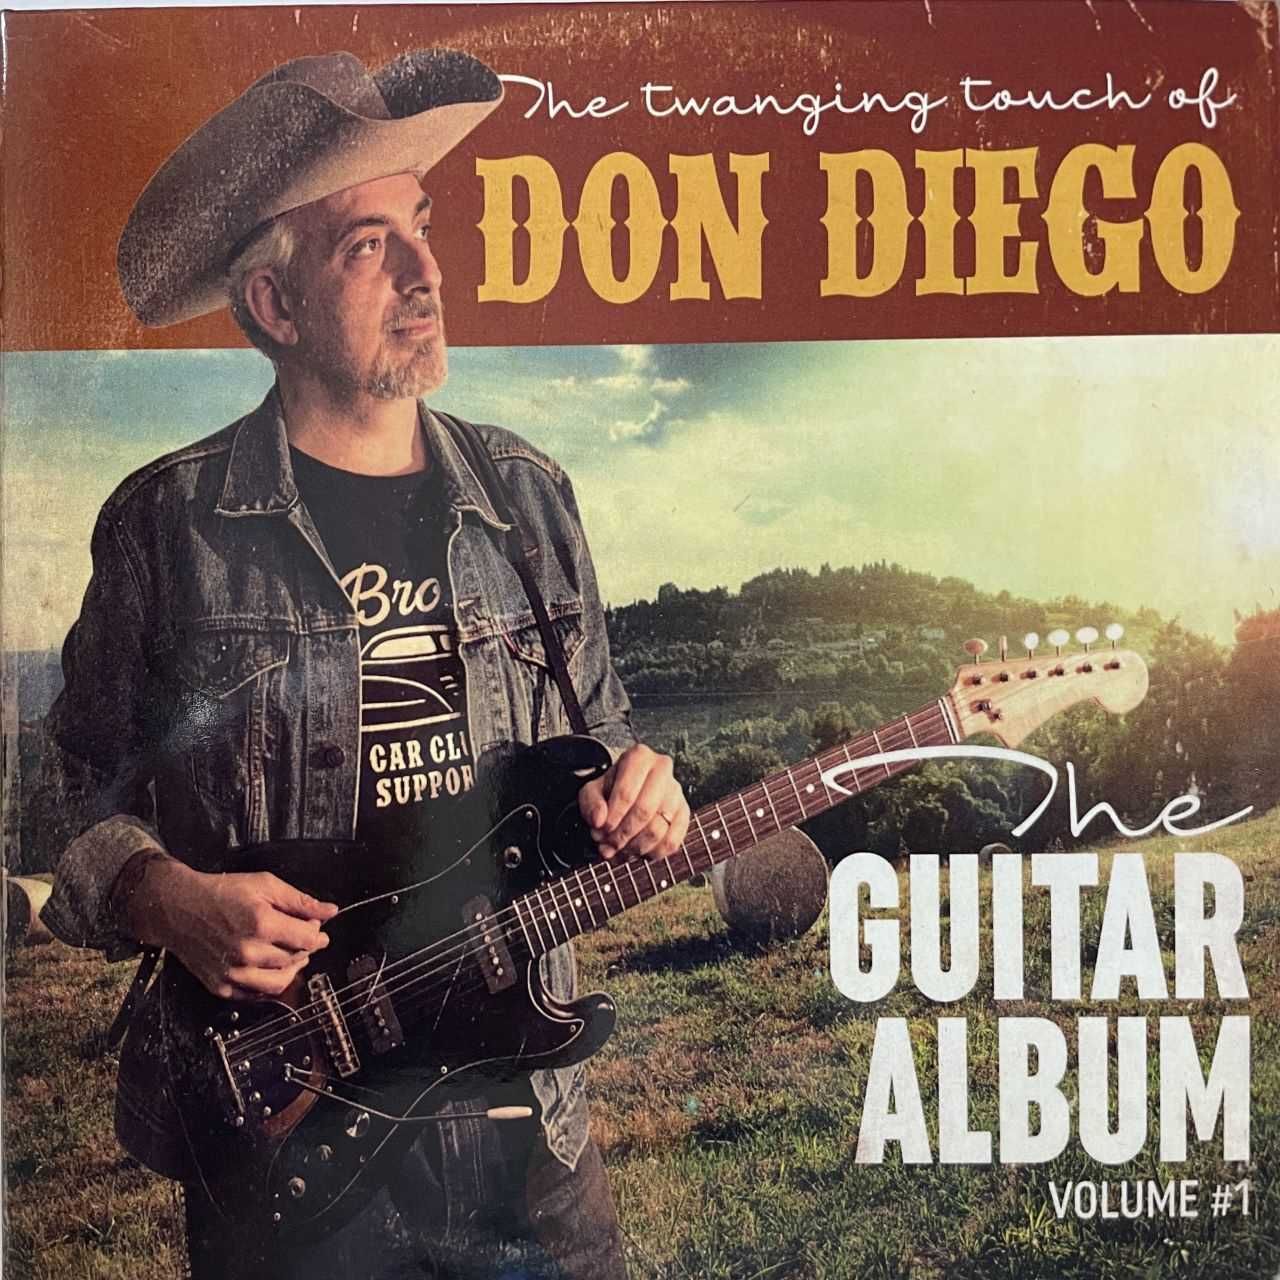 Don Diego - The Guitar Album Vol #1 cover album